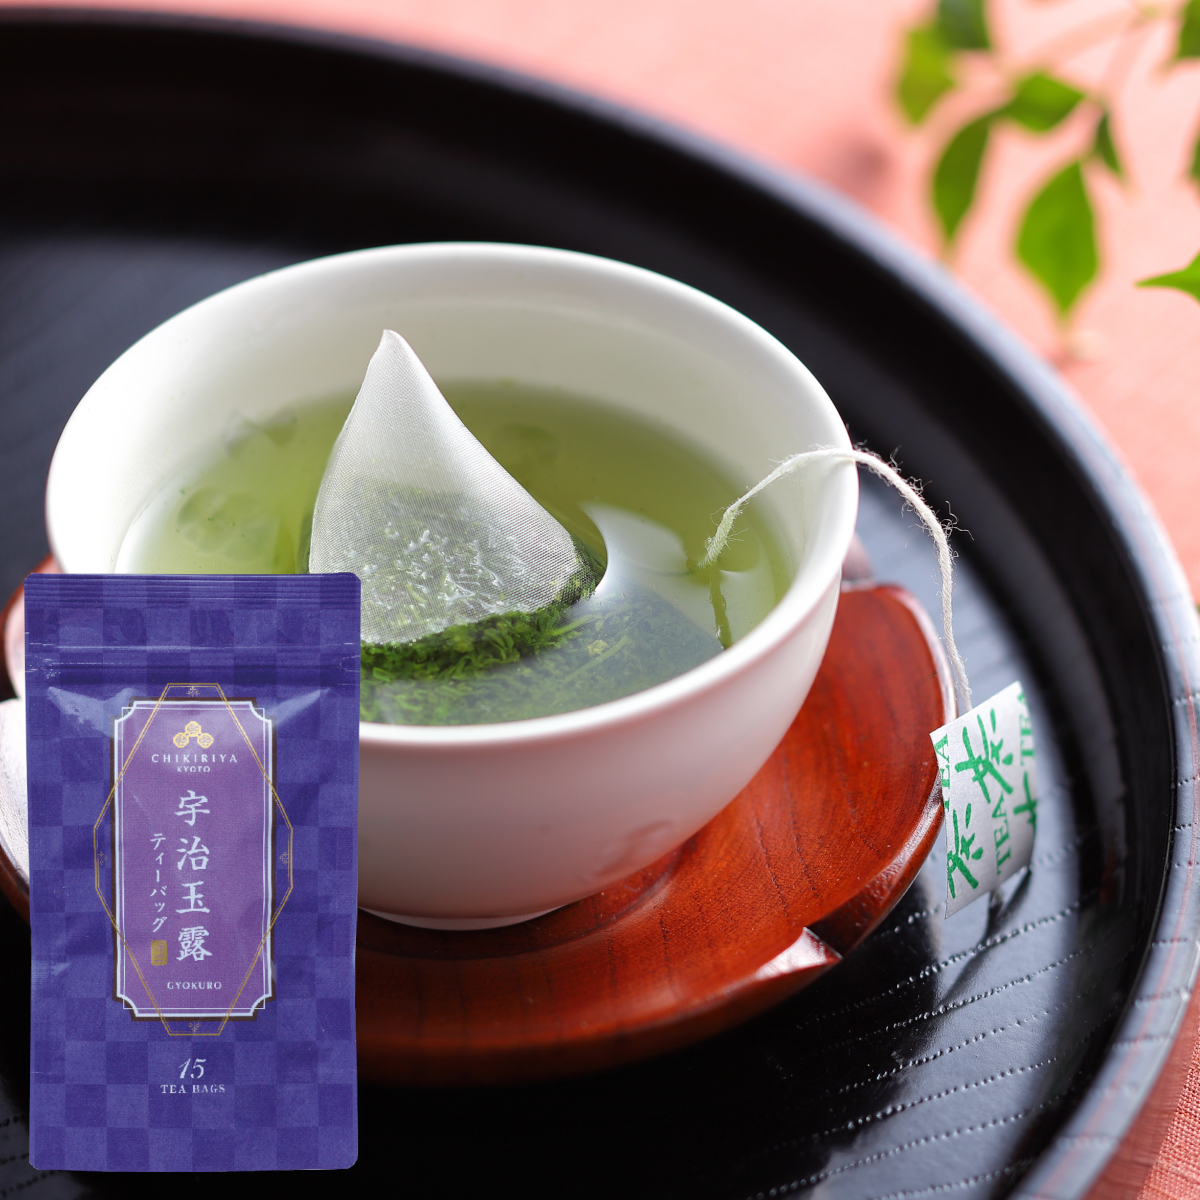 Uji Gyokuro (high-quality Japanese green tea from Kyoto) - 15 Tea bags